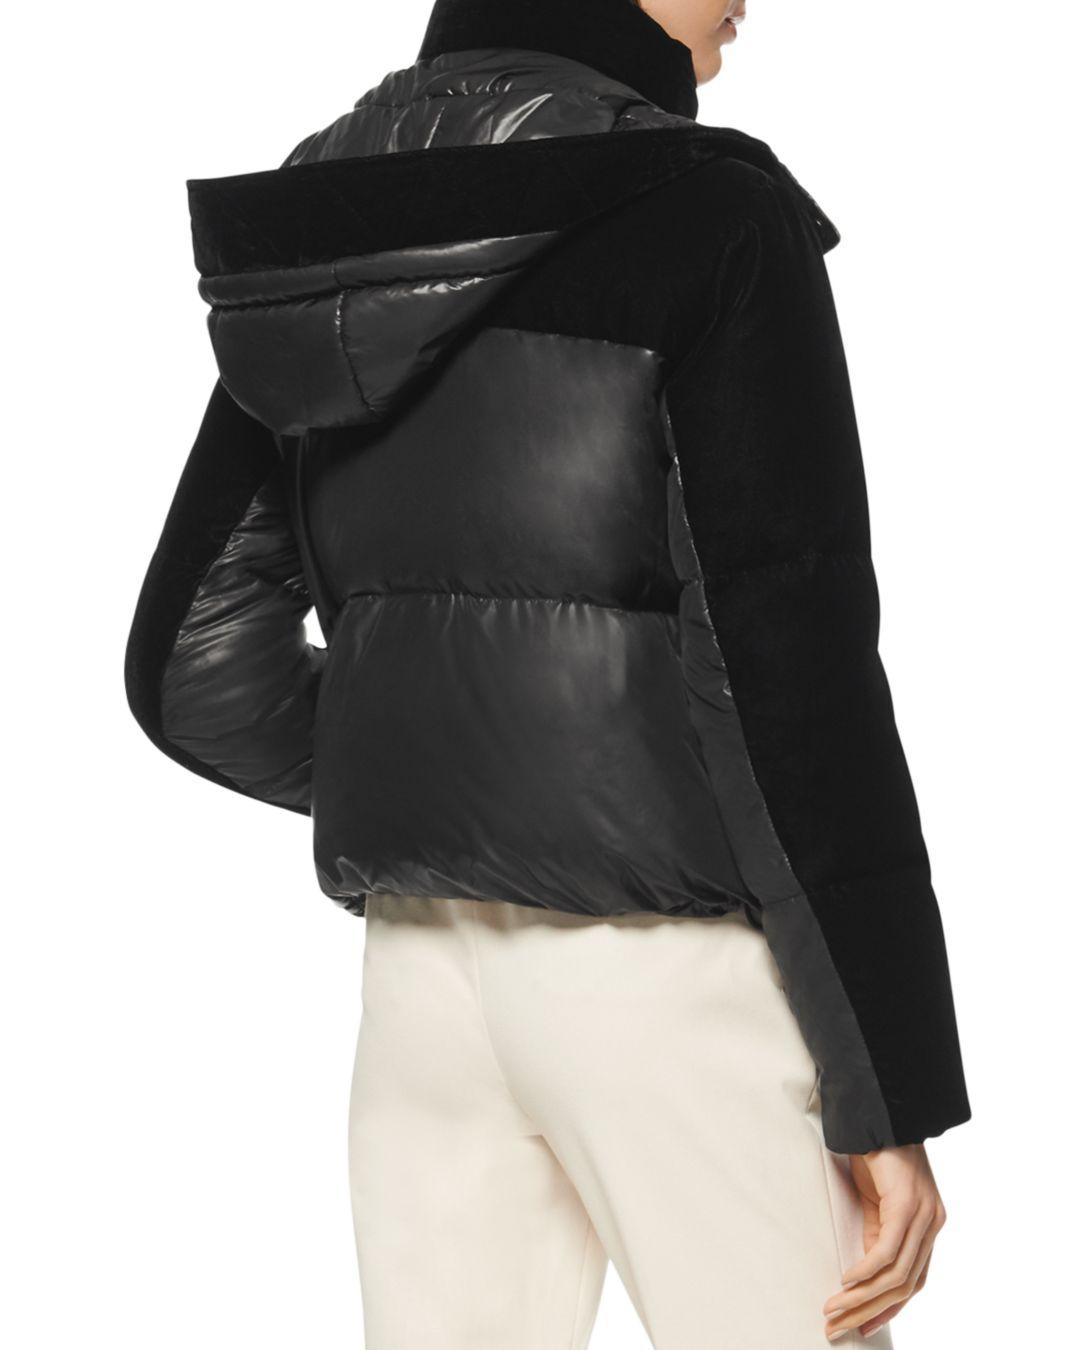 marc new york velvet puffer jacket, Off 74%, www.scrimaglio.com